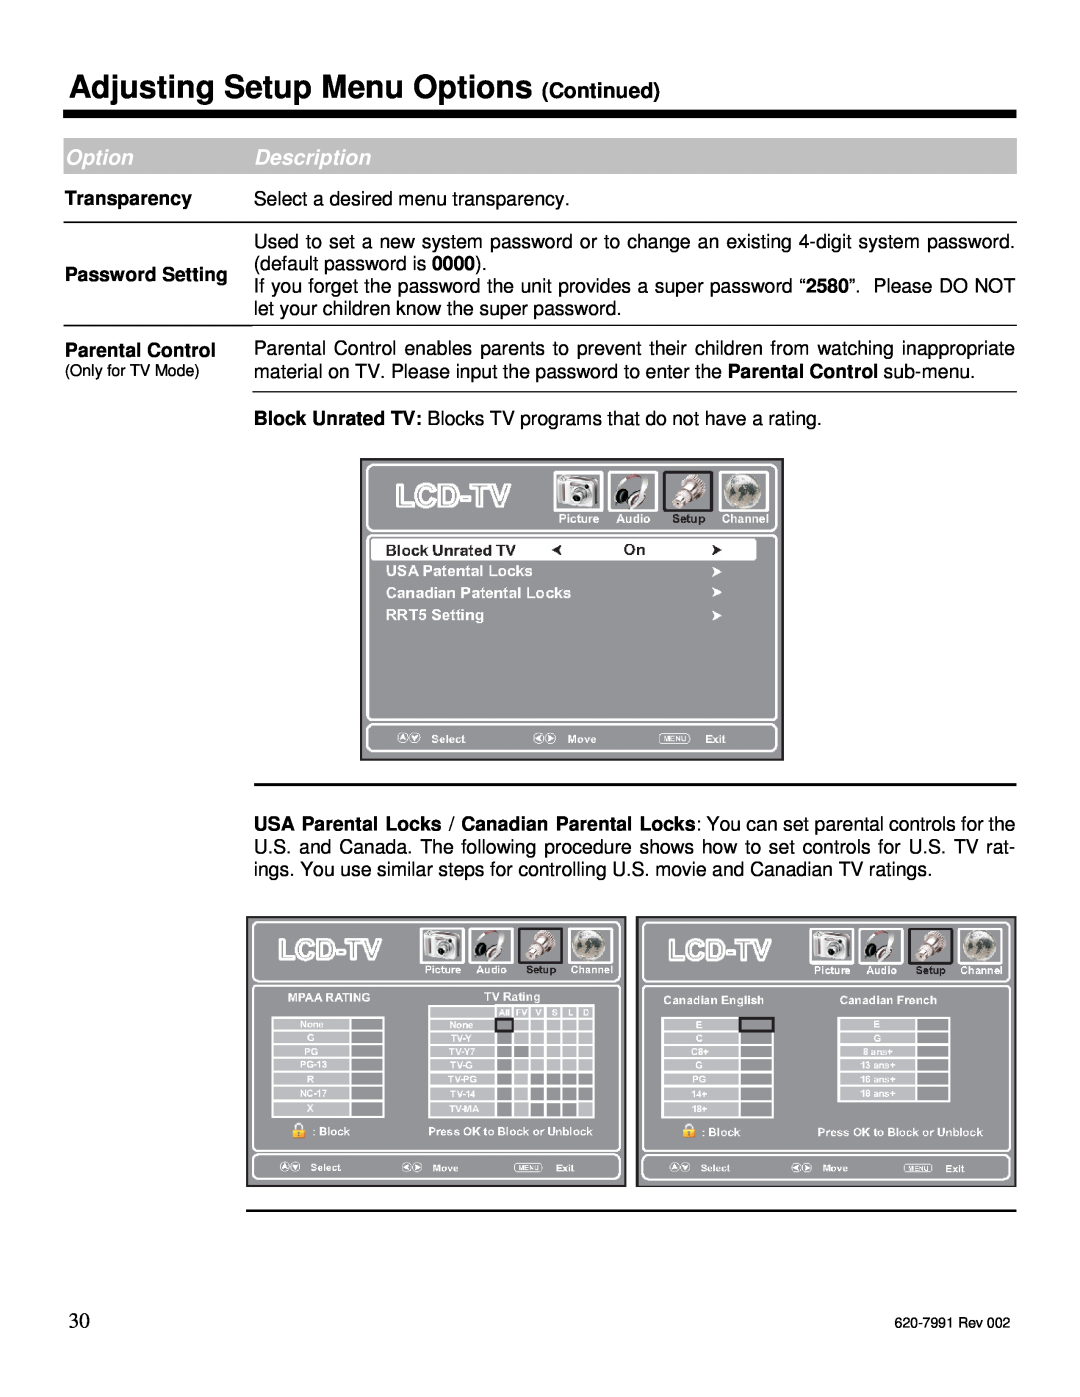 Star Trac E-STi Adjusting Setup Menu Options Continued, Description, Transparency, Password Setting, Parental Control 